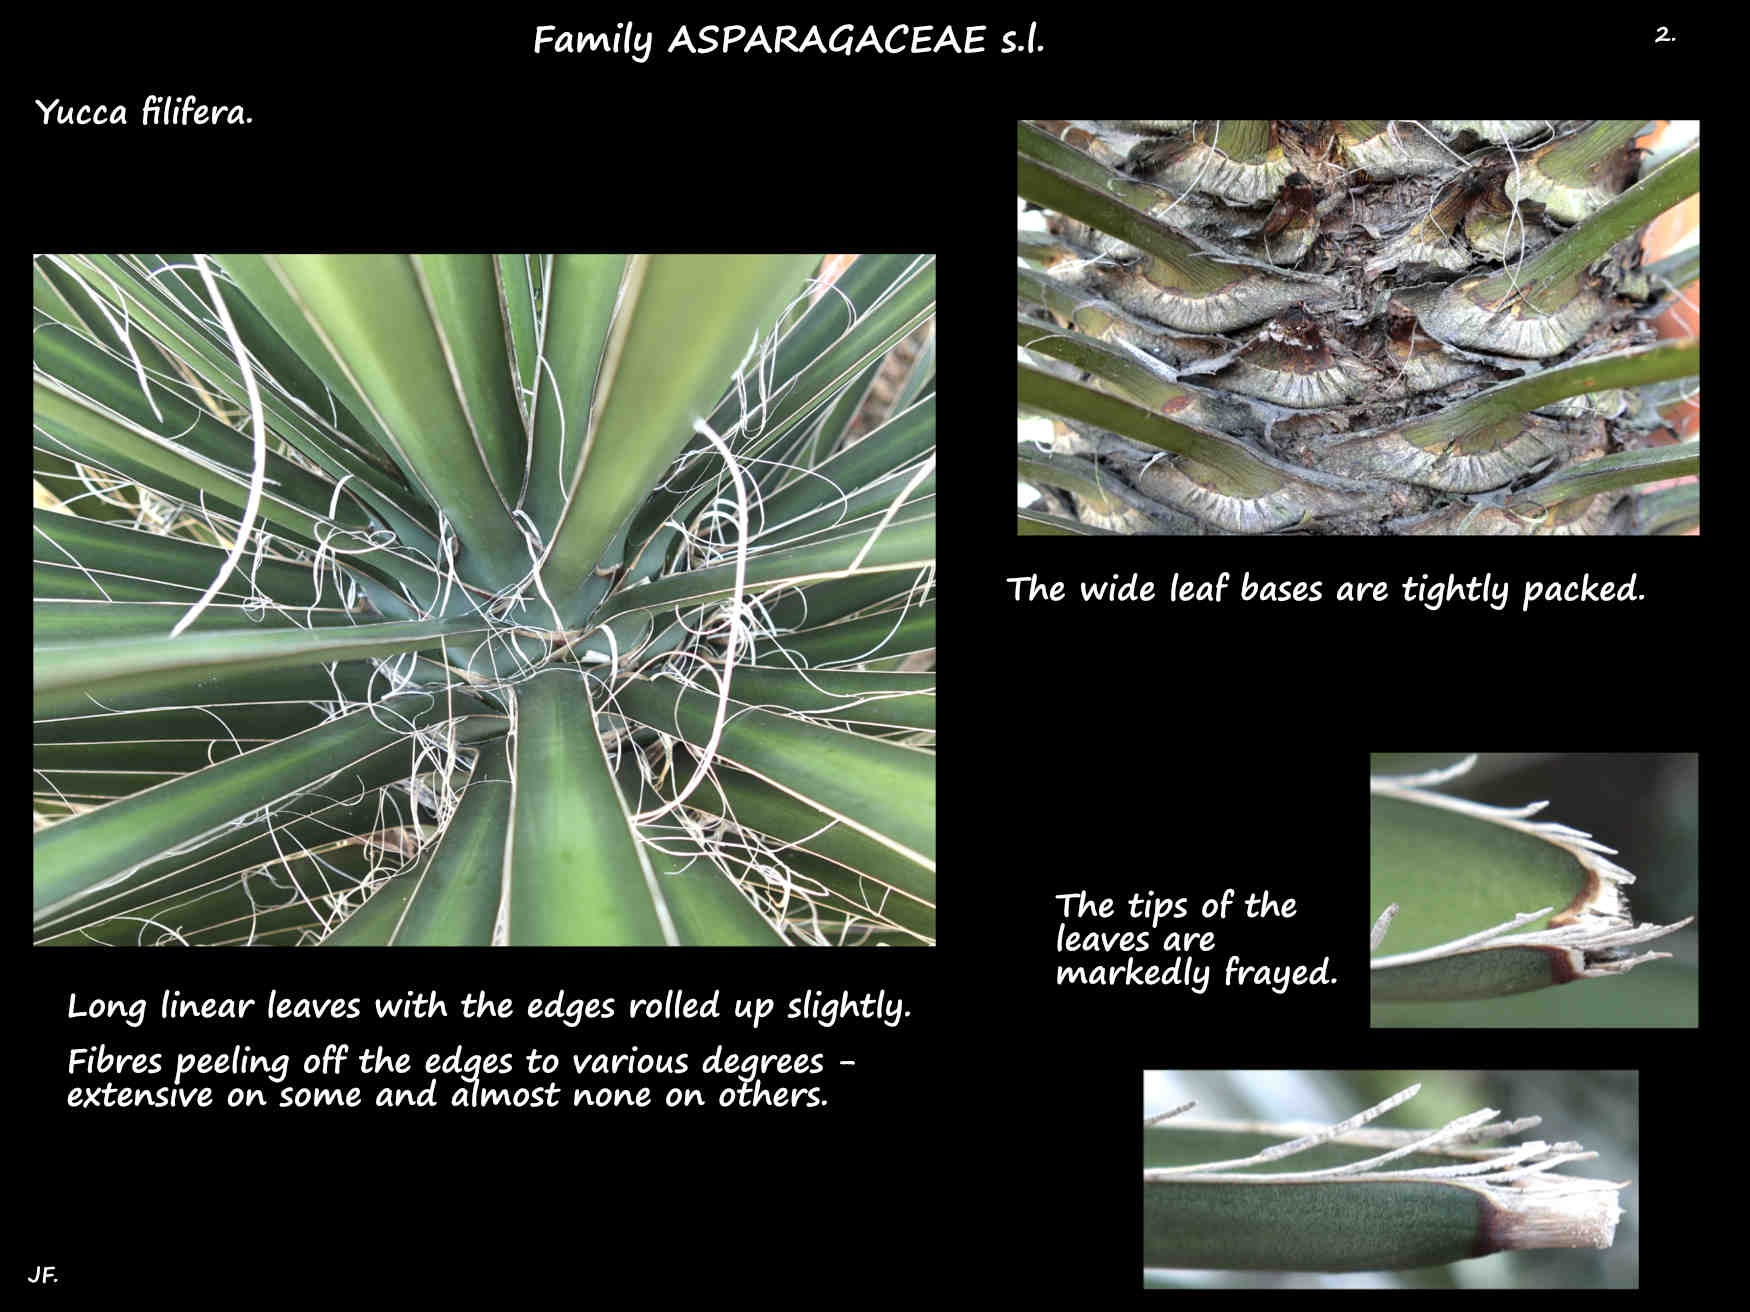 2 The leaves of Yucca filifera